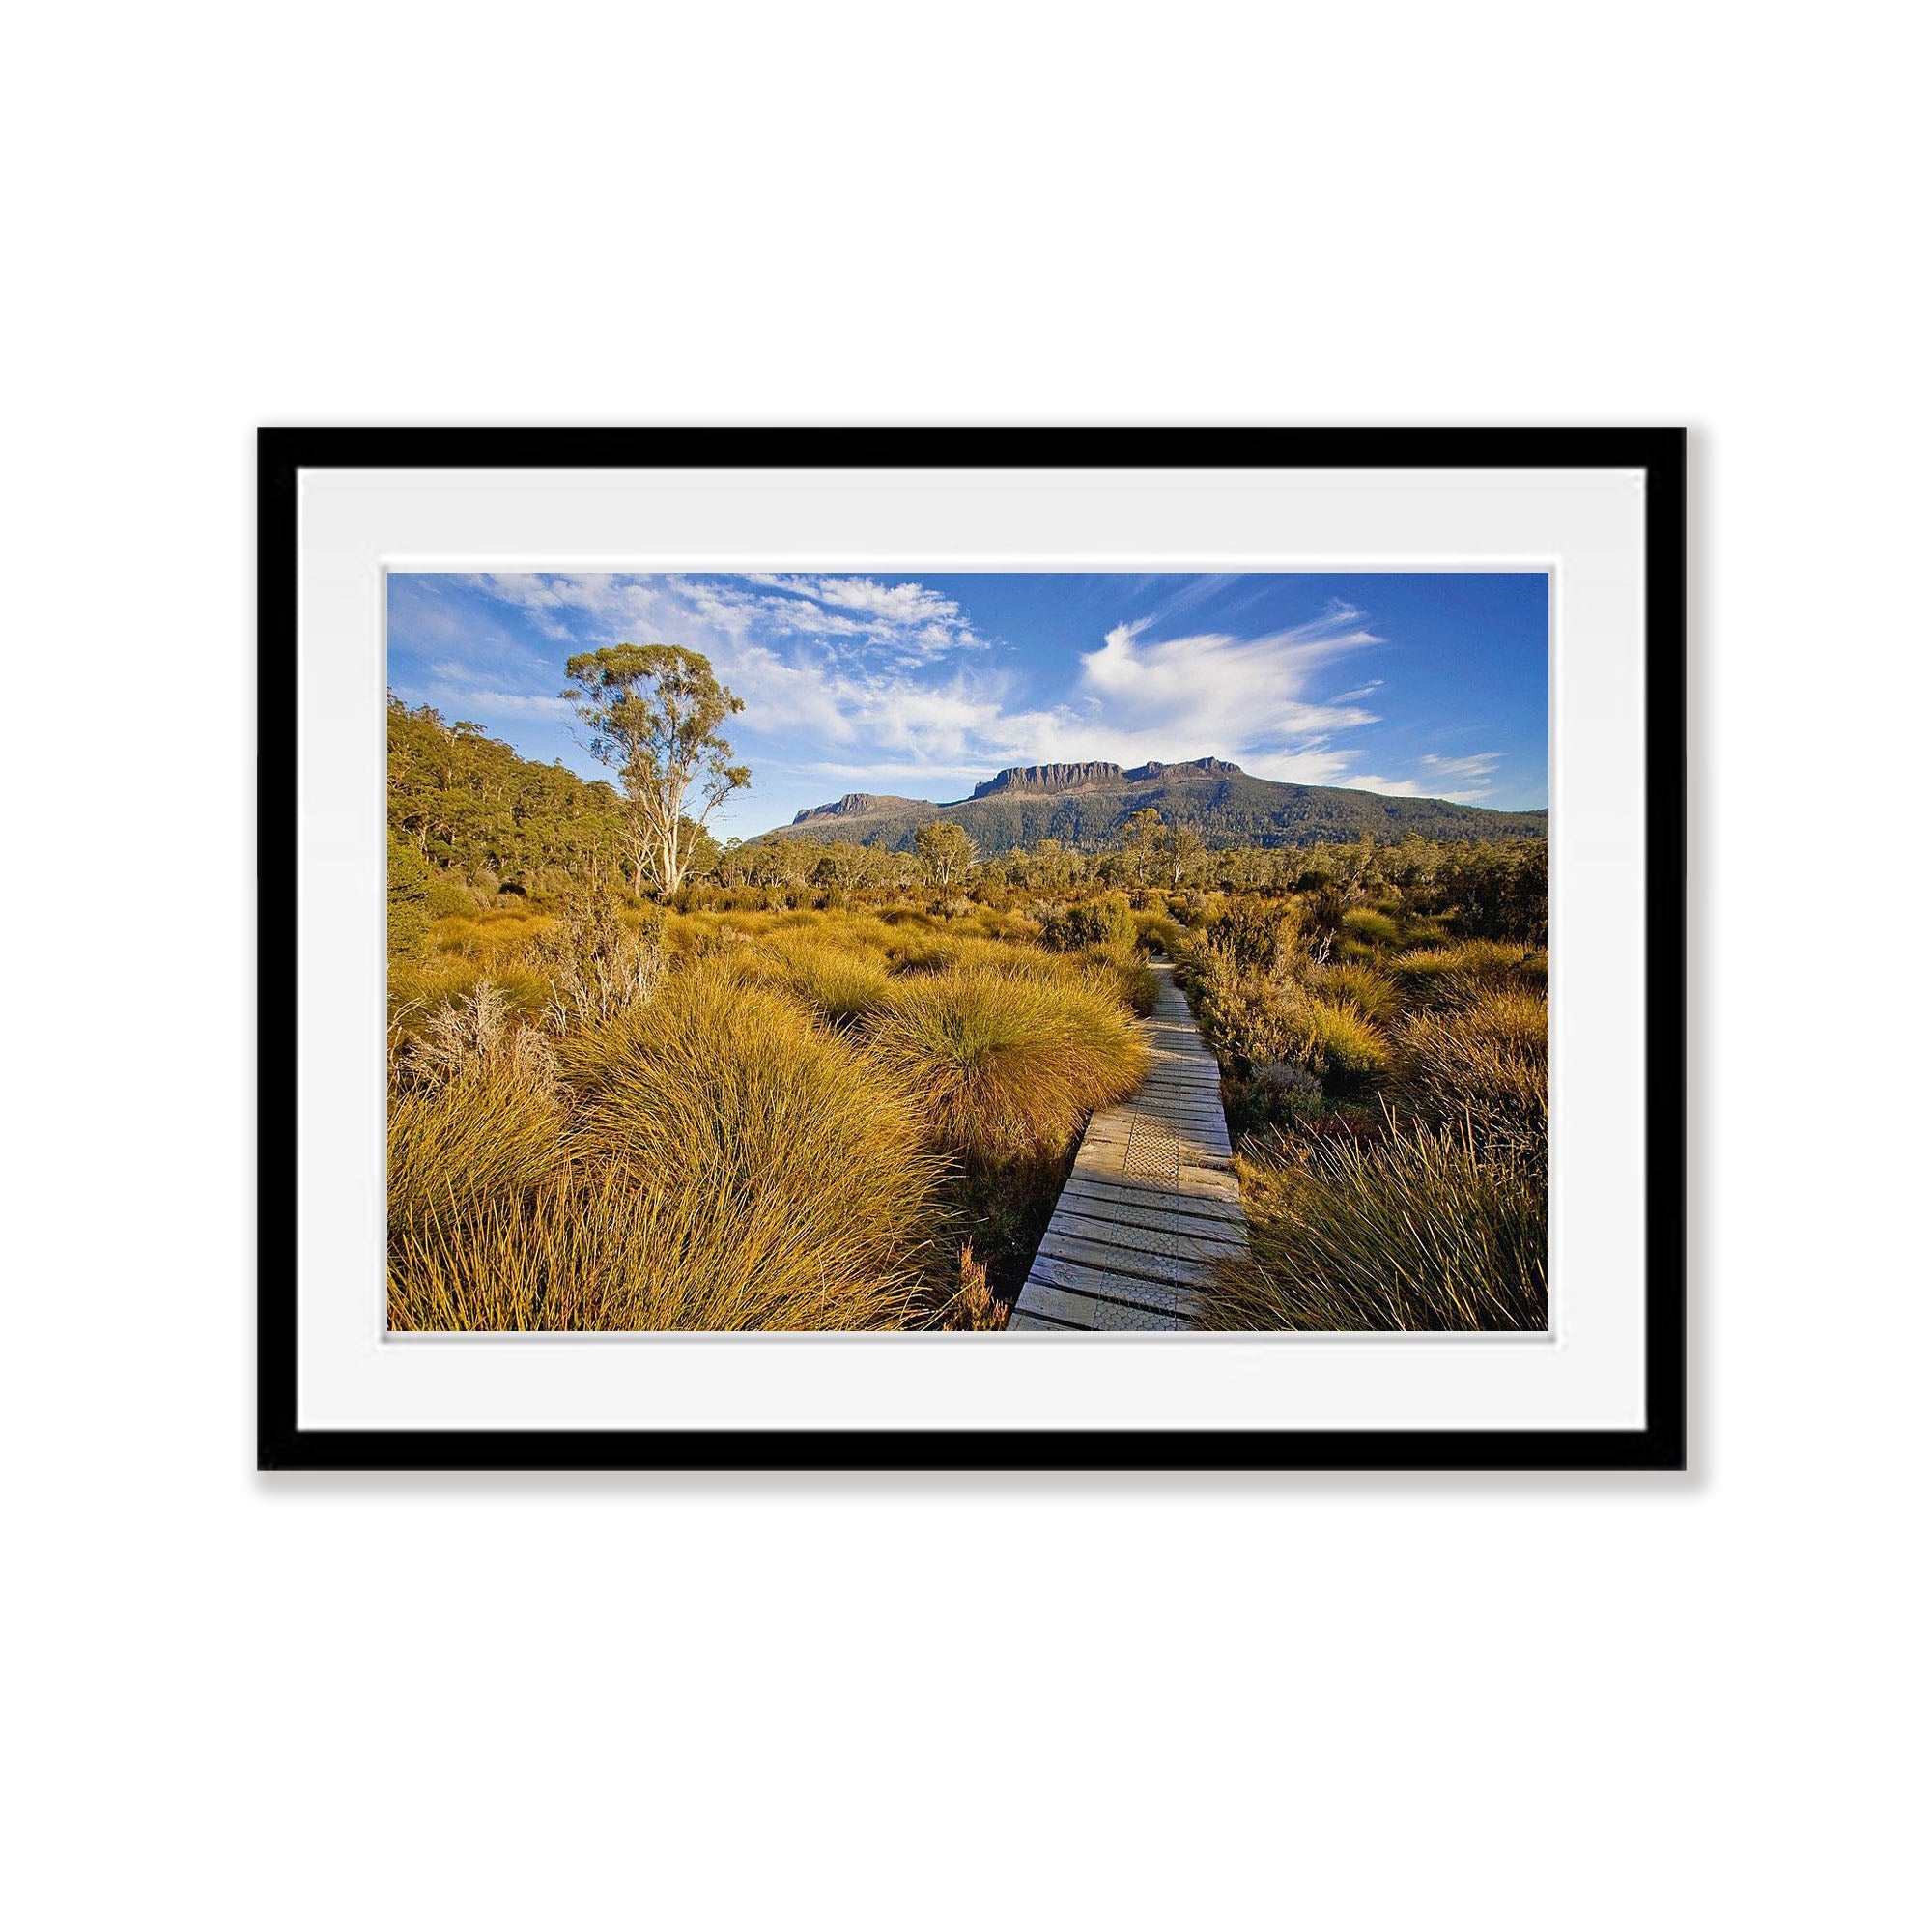 The Overland Track, Cradle Mountain, Tasmania